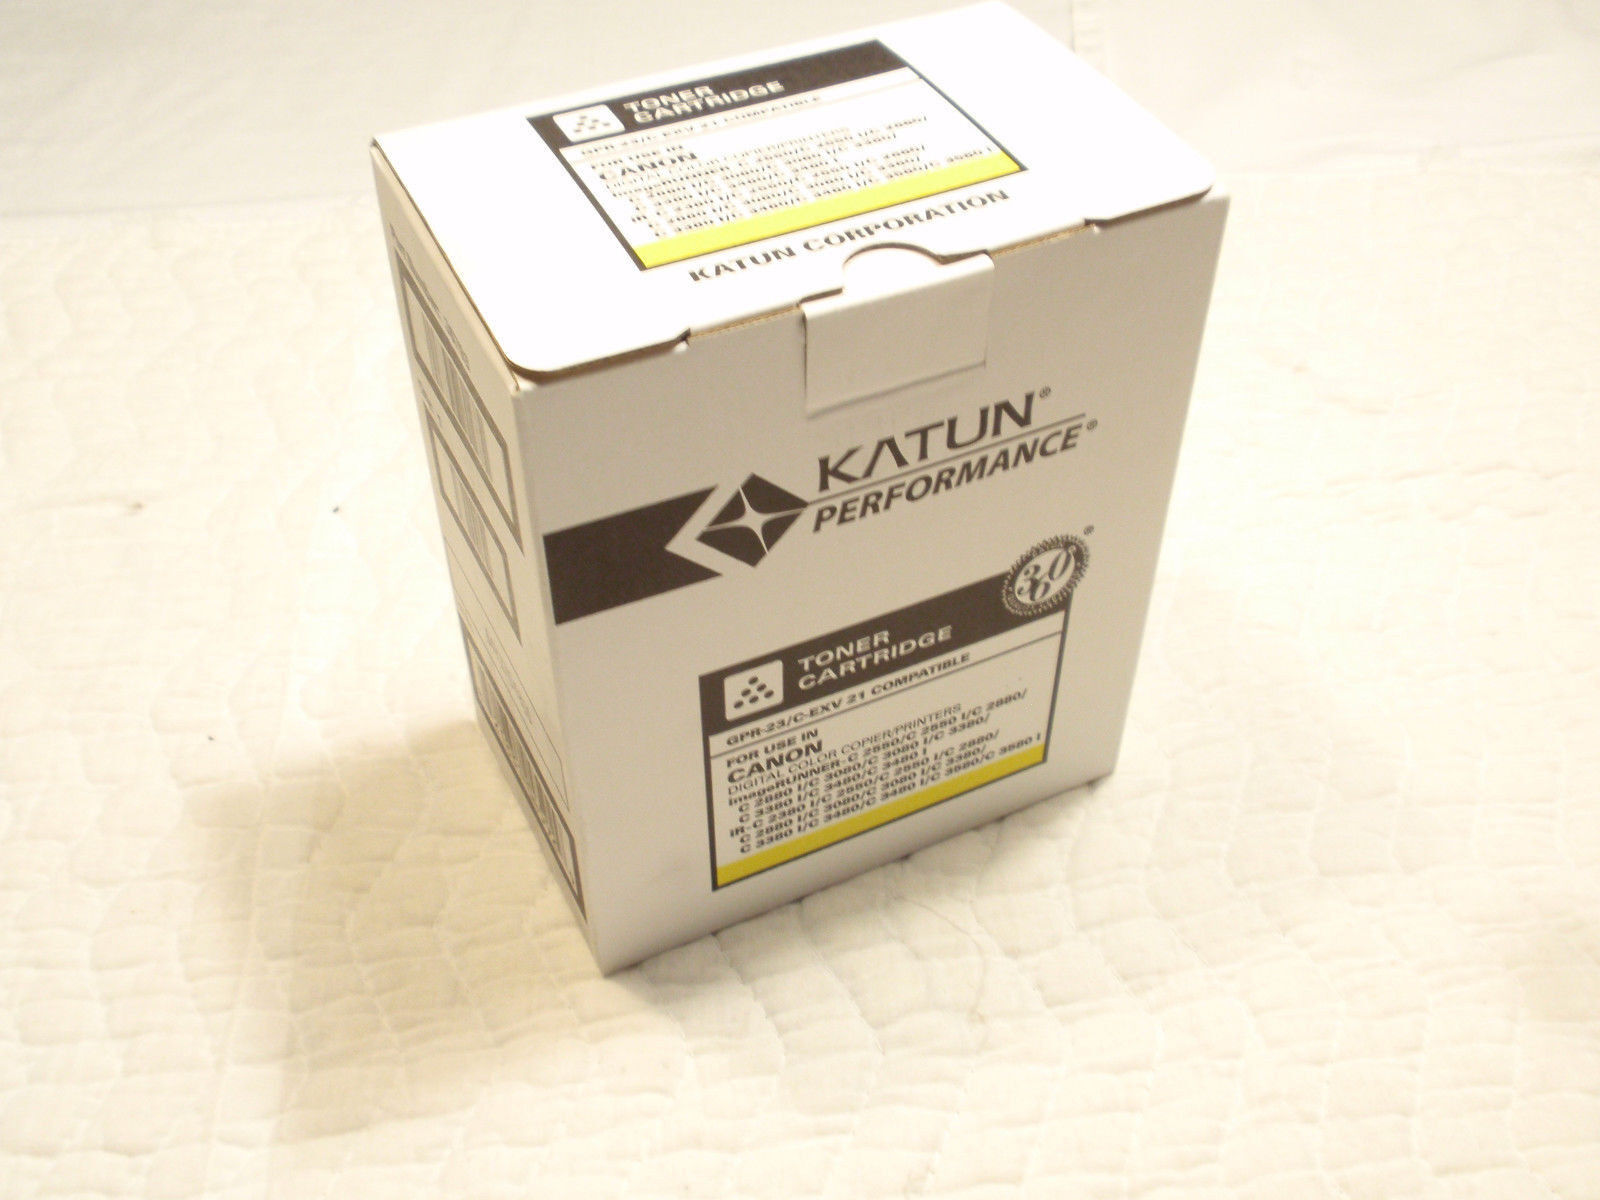 NEW / KATUN GPR-23 / C-EXV 21 / Yellow Toner Cartridge / FACTORY SEALED / CANON